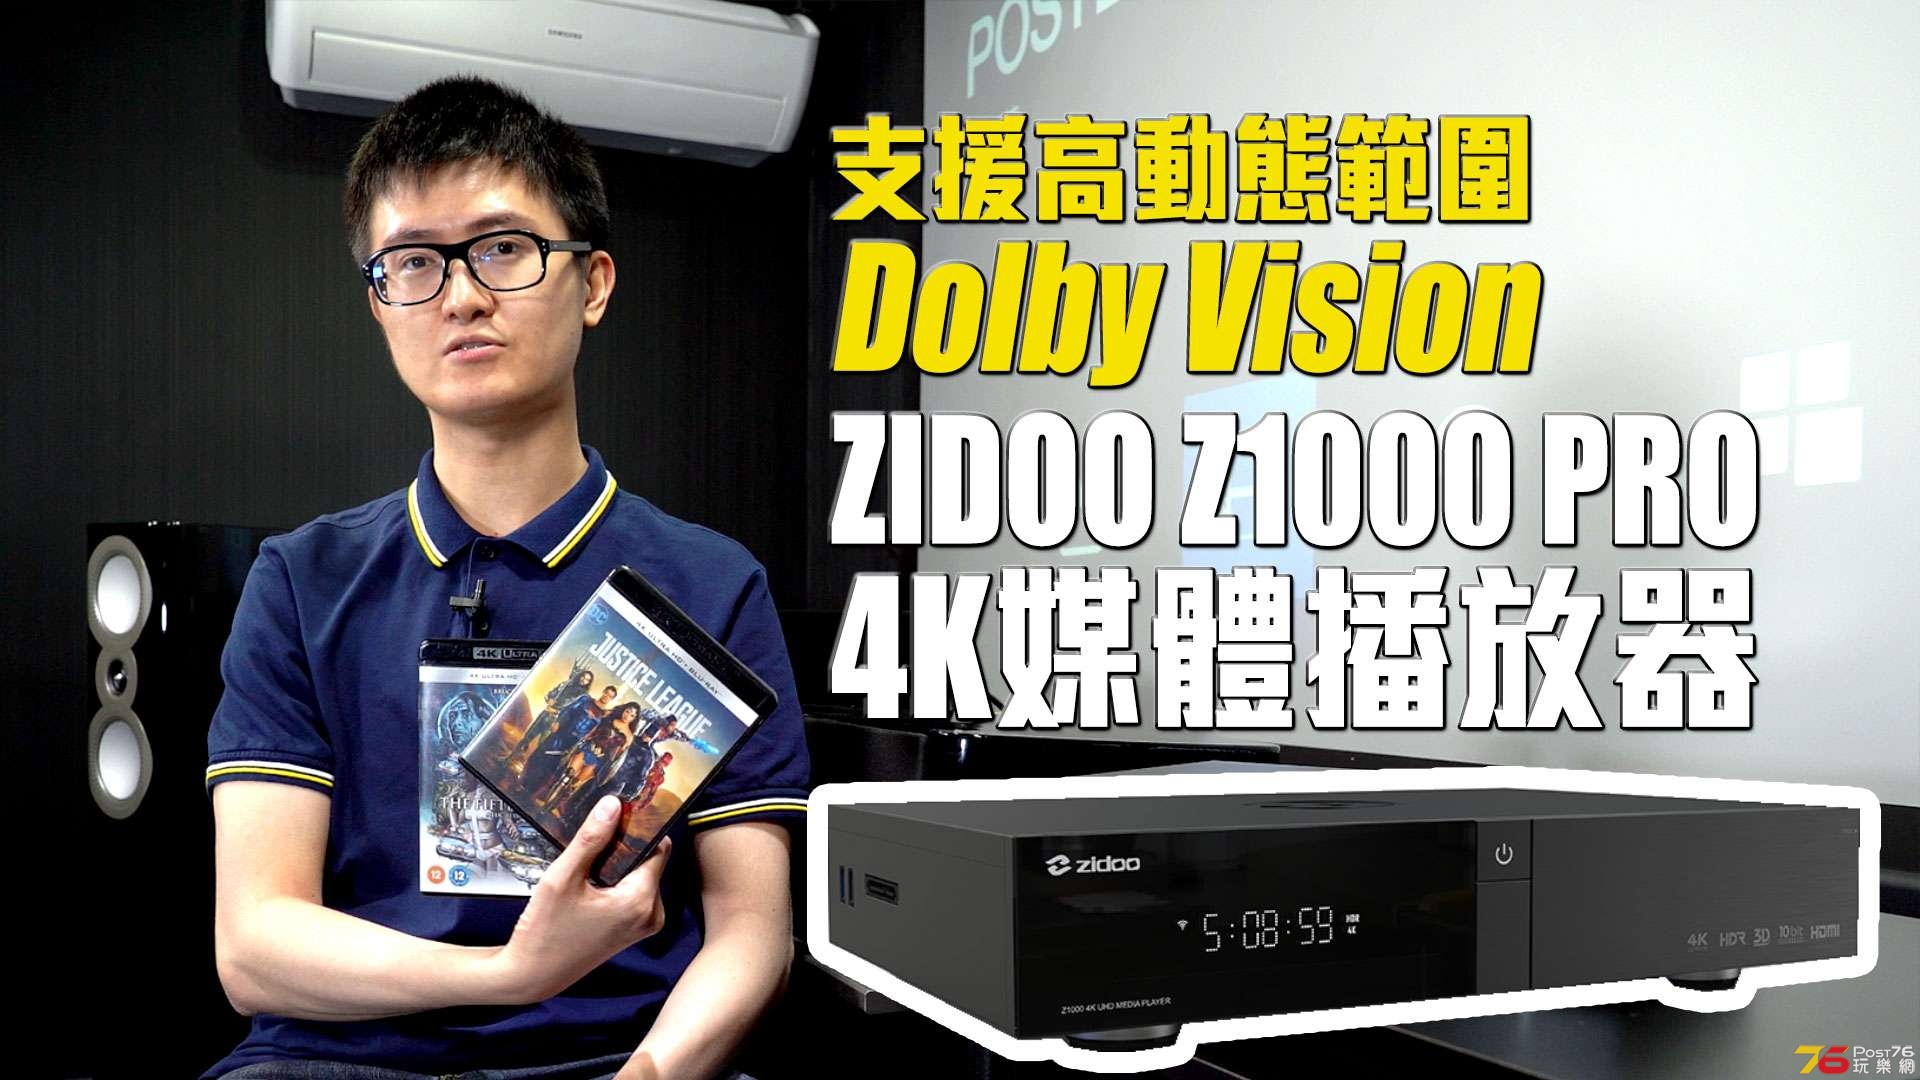 zidoo-z1000-pro-4k-media-player-review-forum.jpg